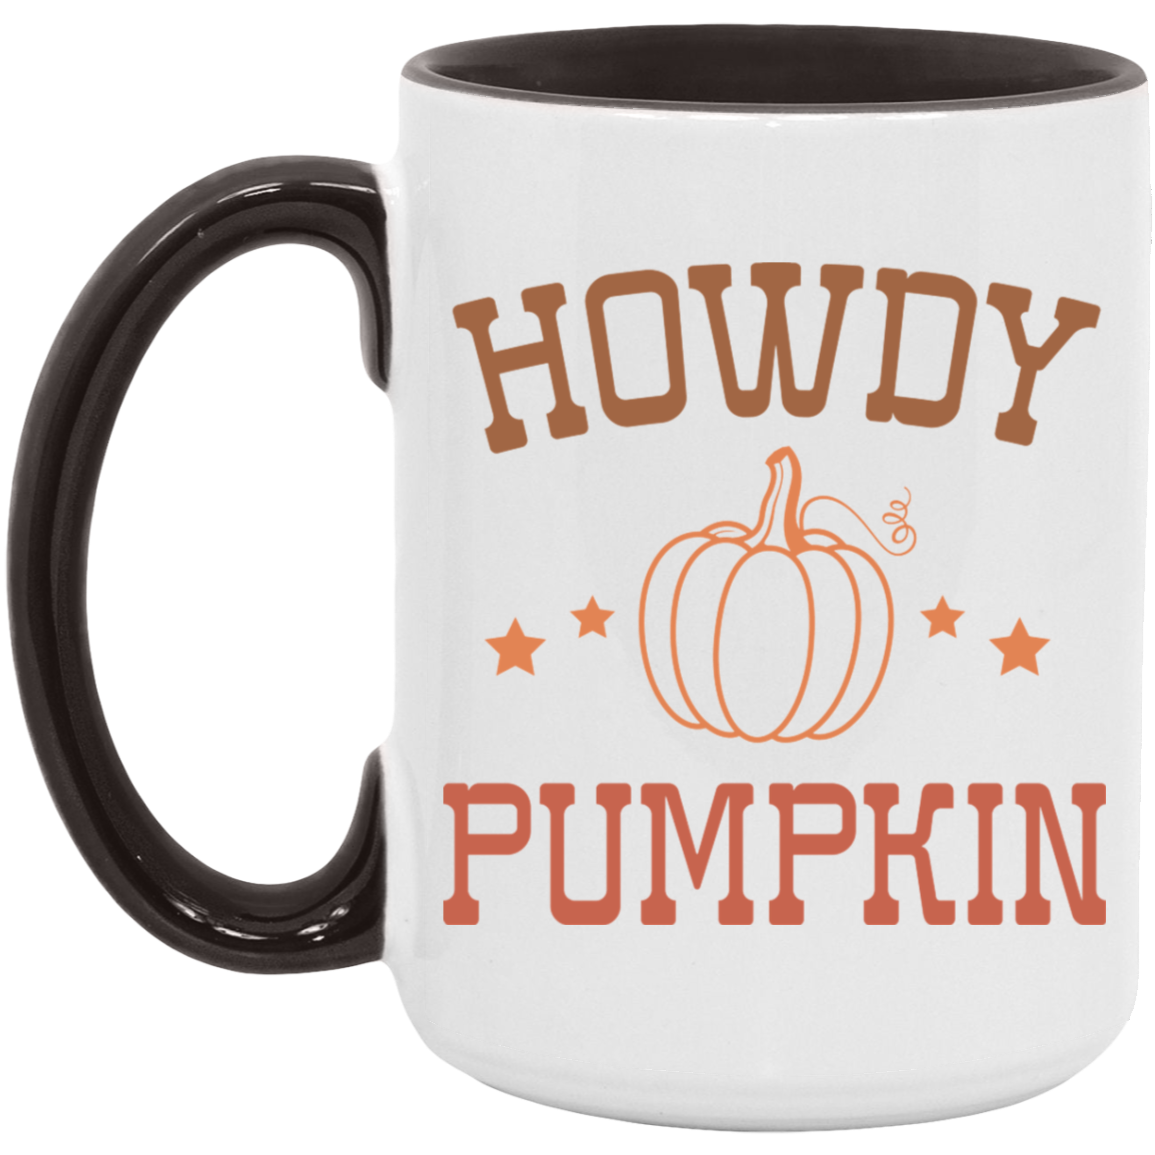 Howdy Pumpkin Mug